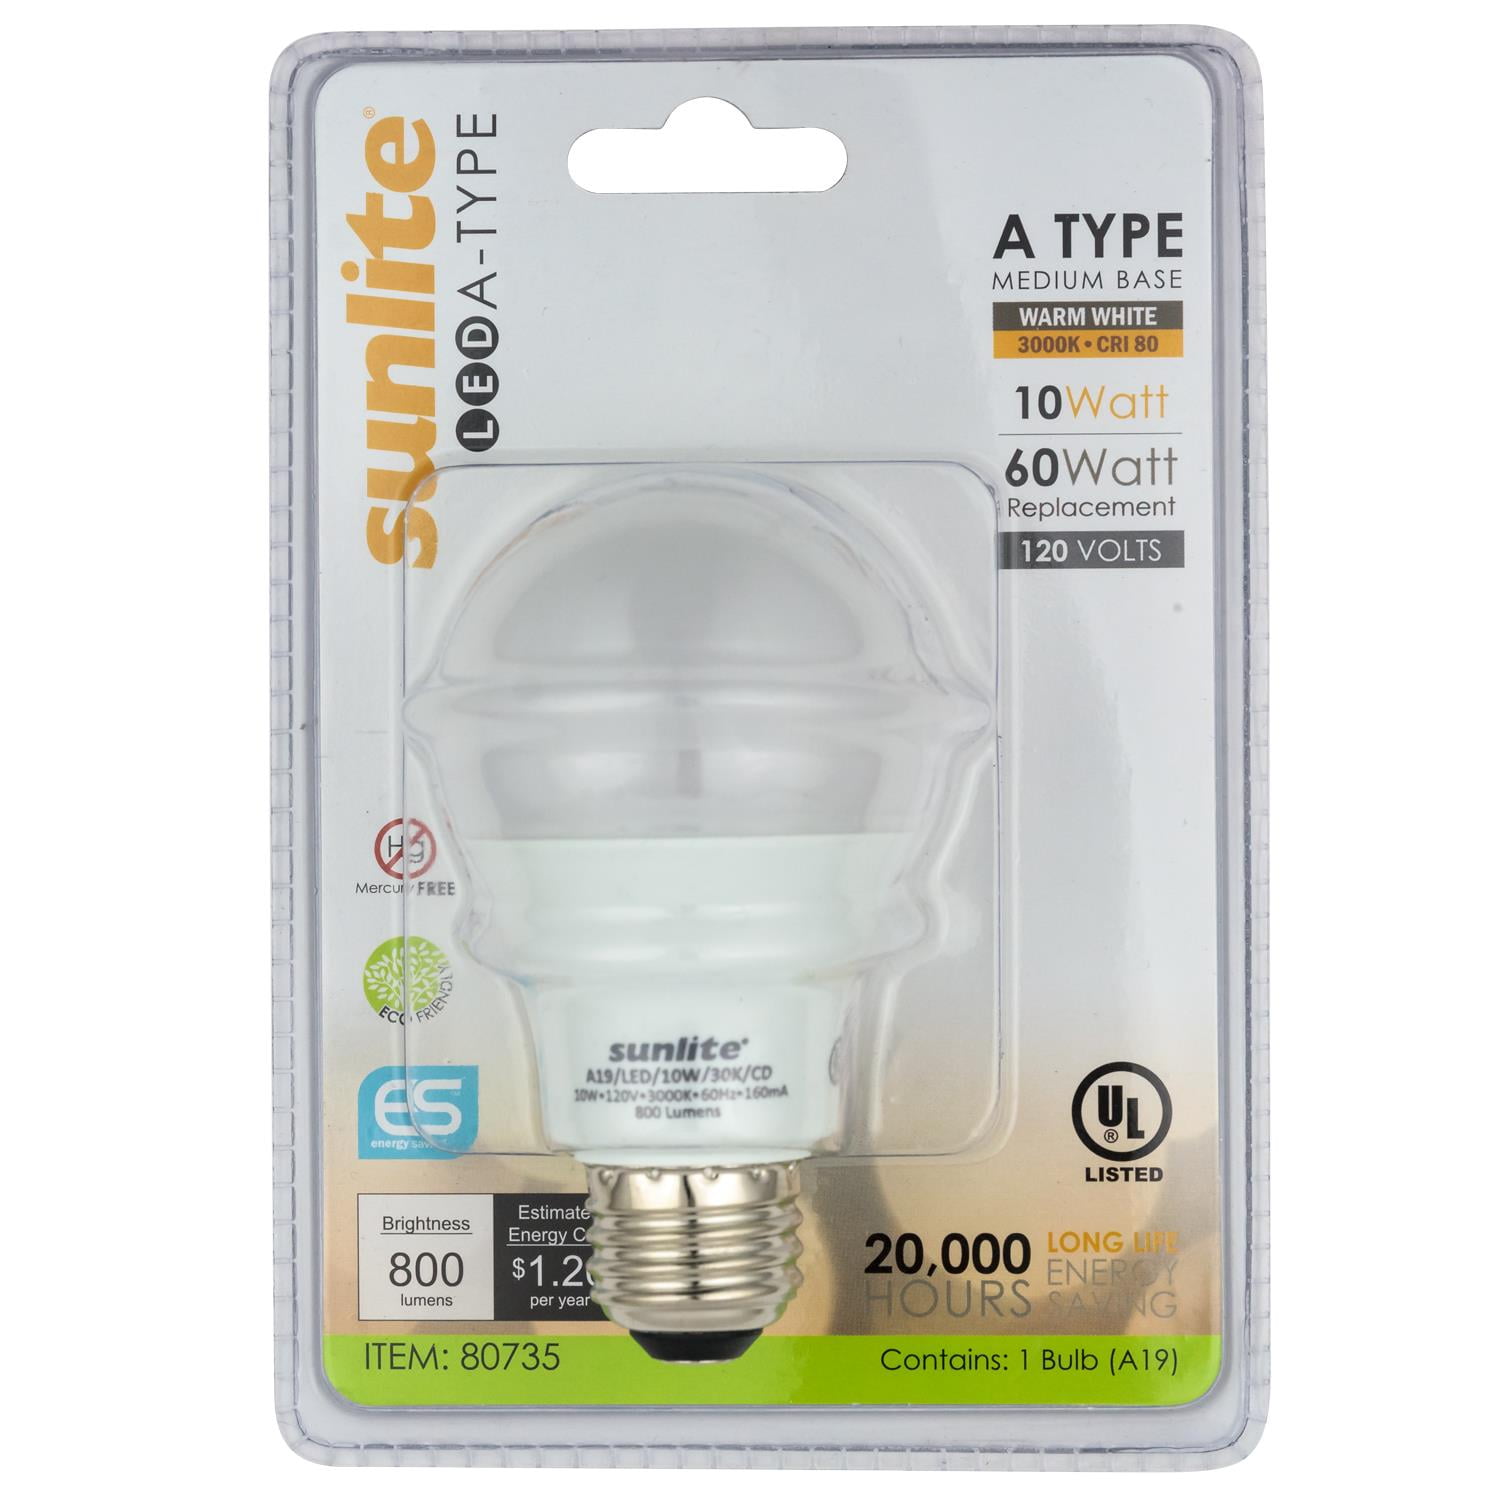 Soft White 5pks RSC Base Globe Electric 0487401 150-watt T3 Halogen Light Bulb 